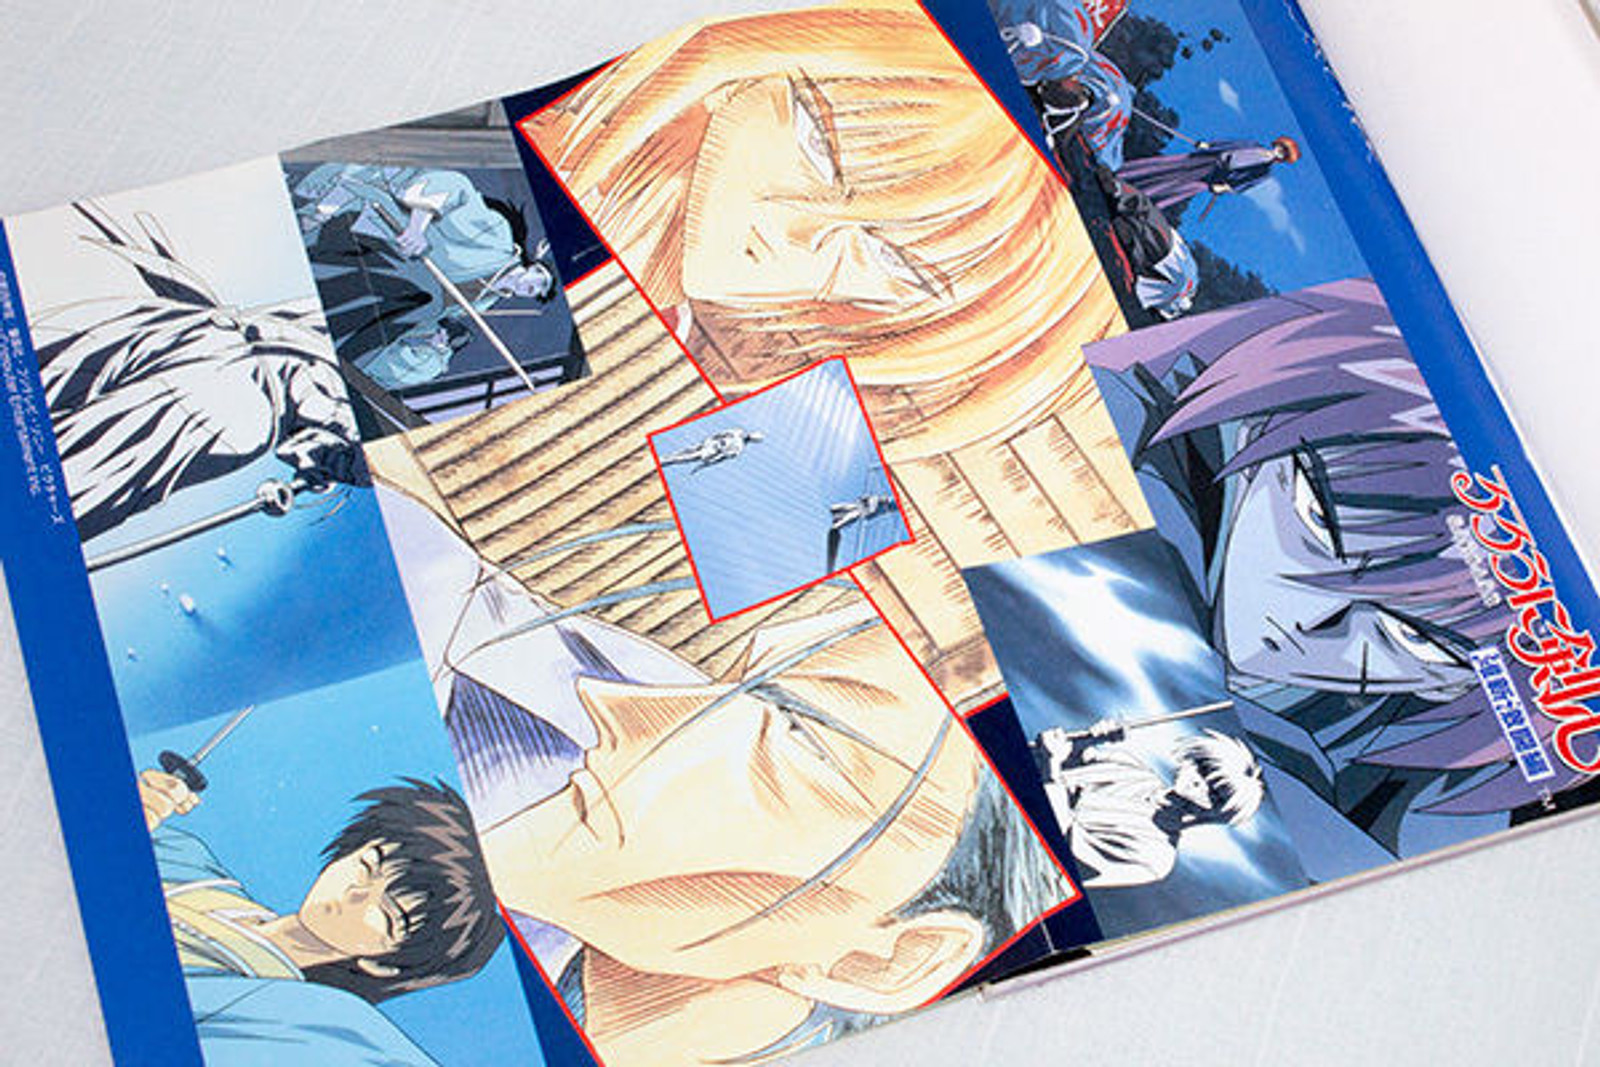 Rurouni Kenshin Ishin Gekitou Game Guide Book Playstation JAPAN ANIME PS JUMP